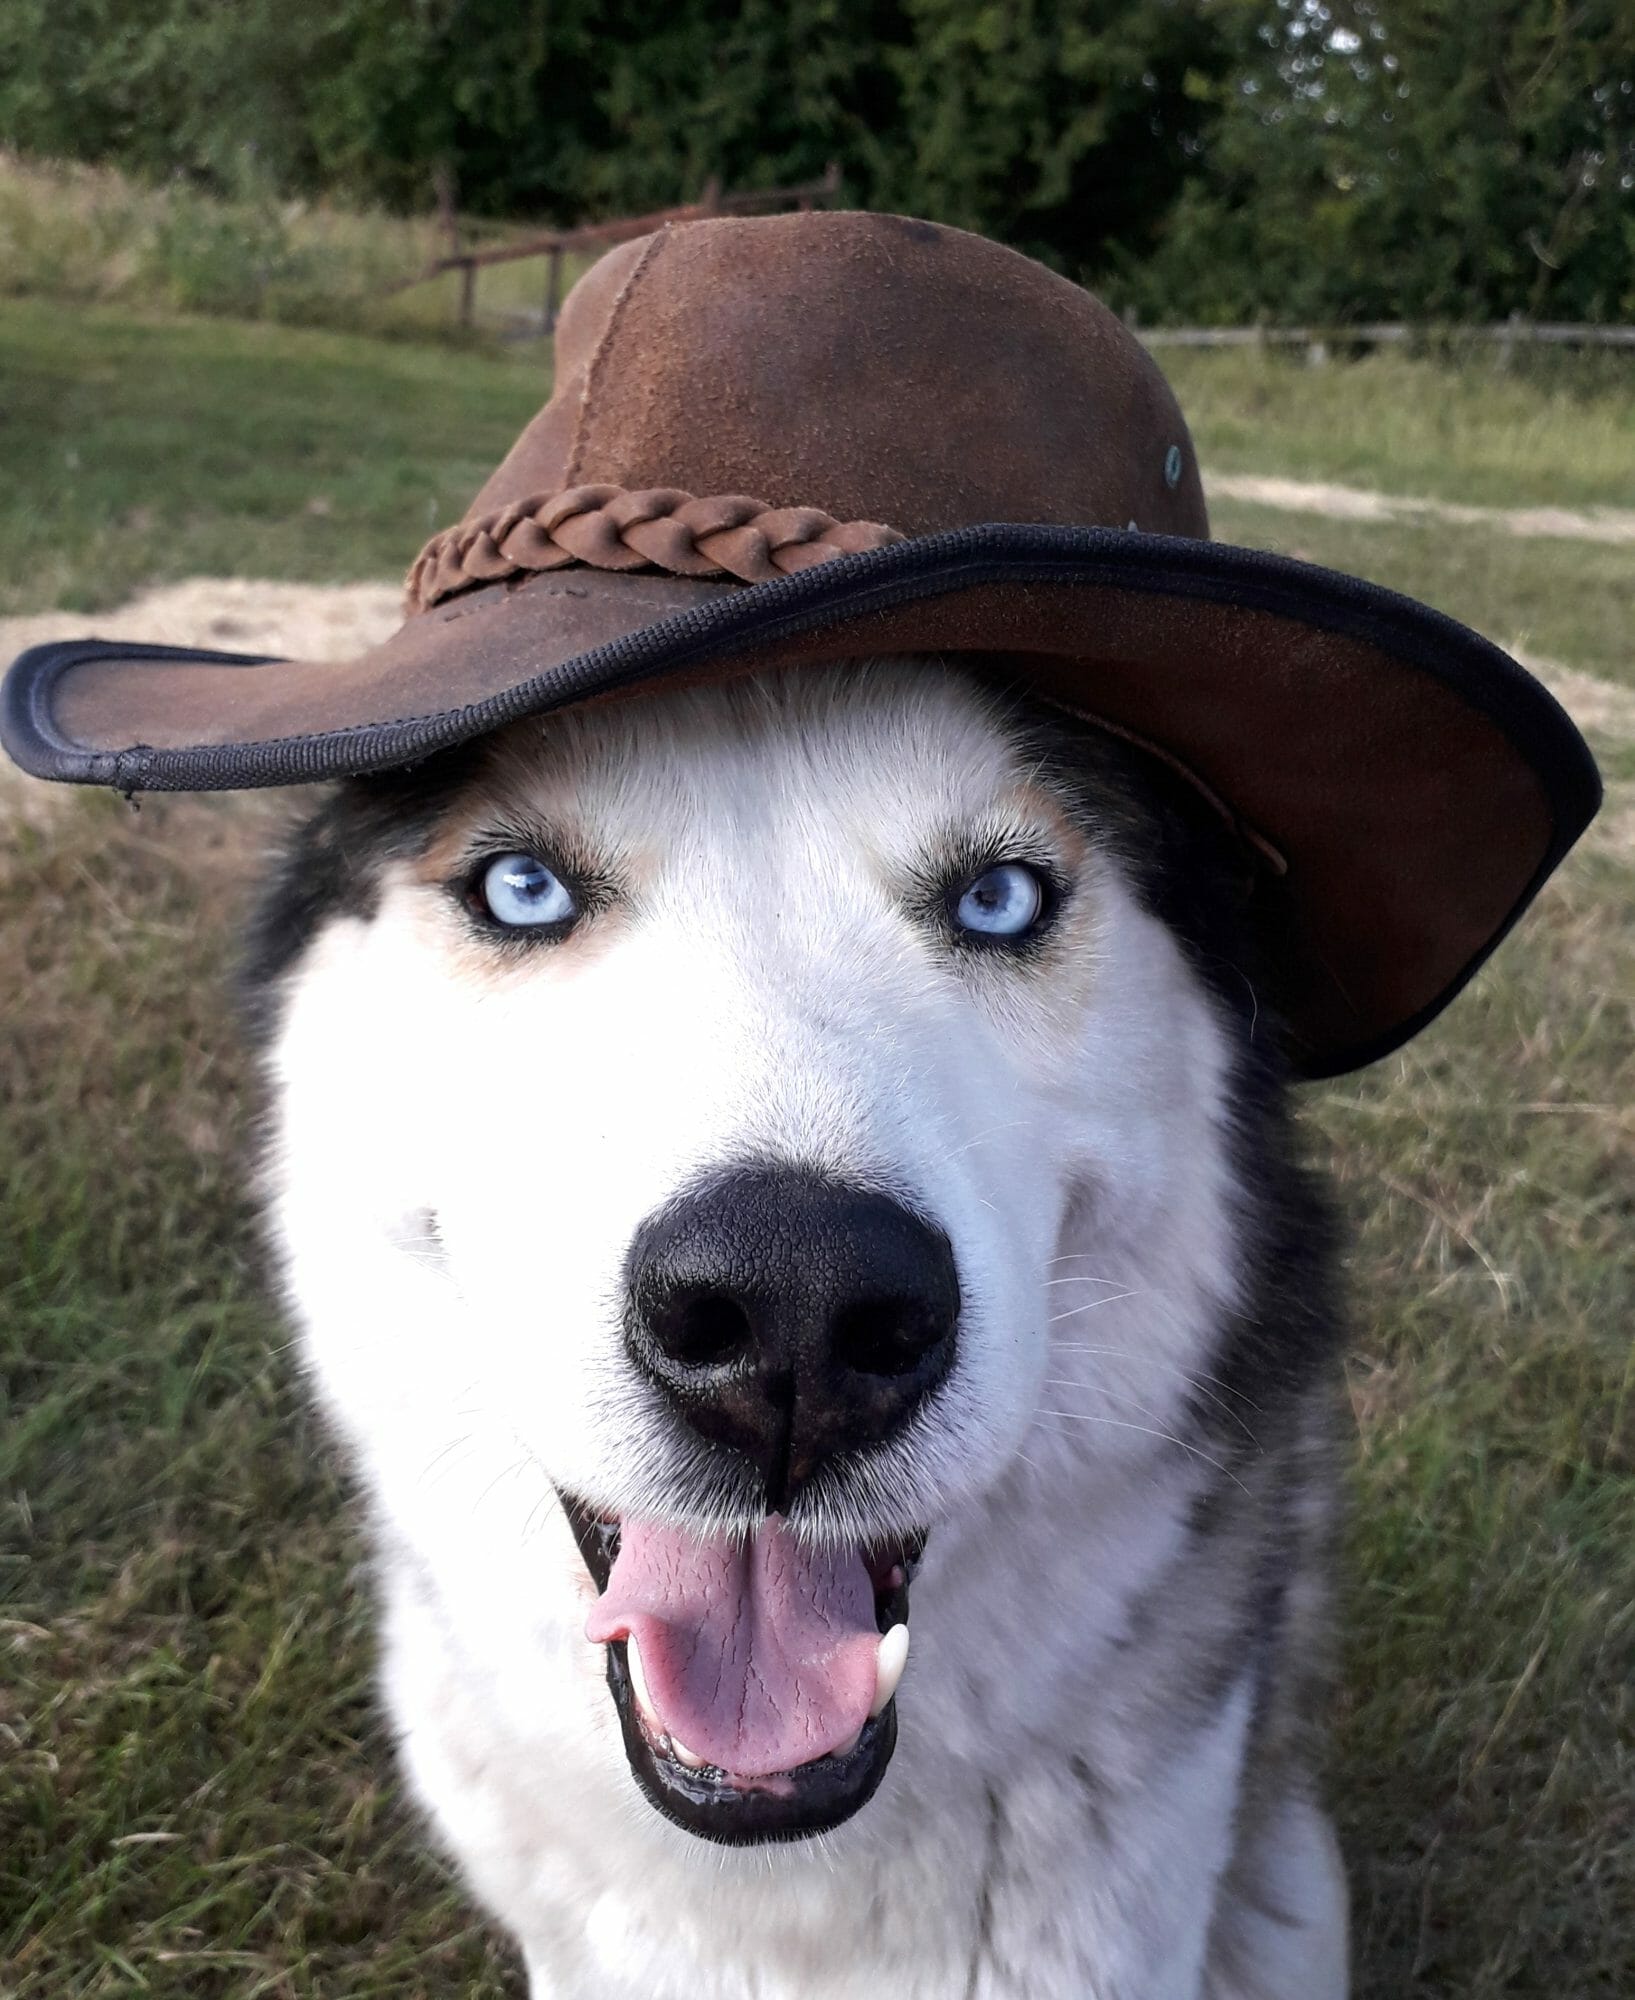 cute dog photo contest winner ses siberian husky aug 22